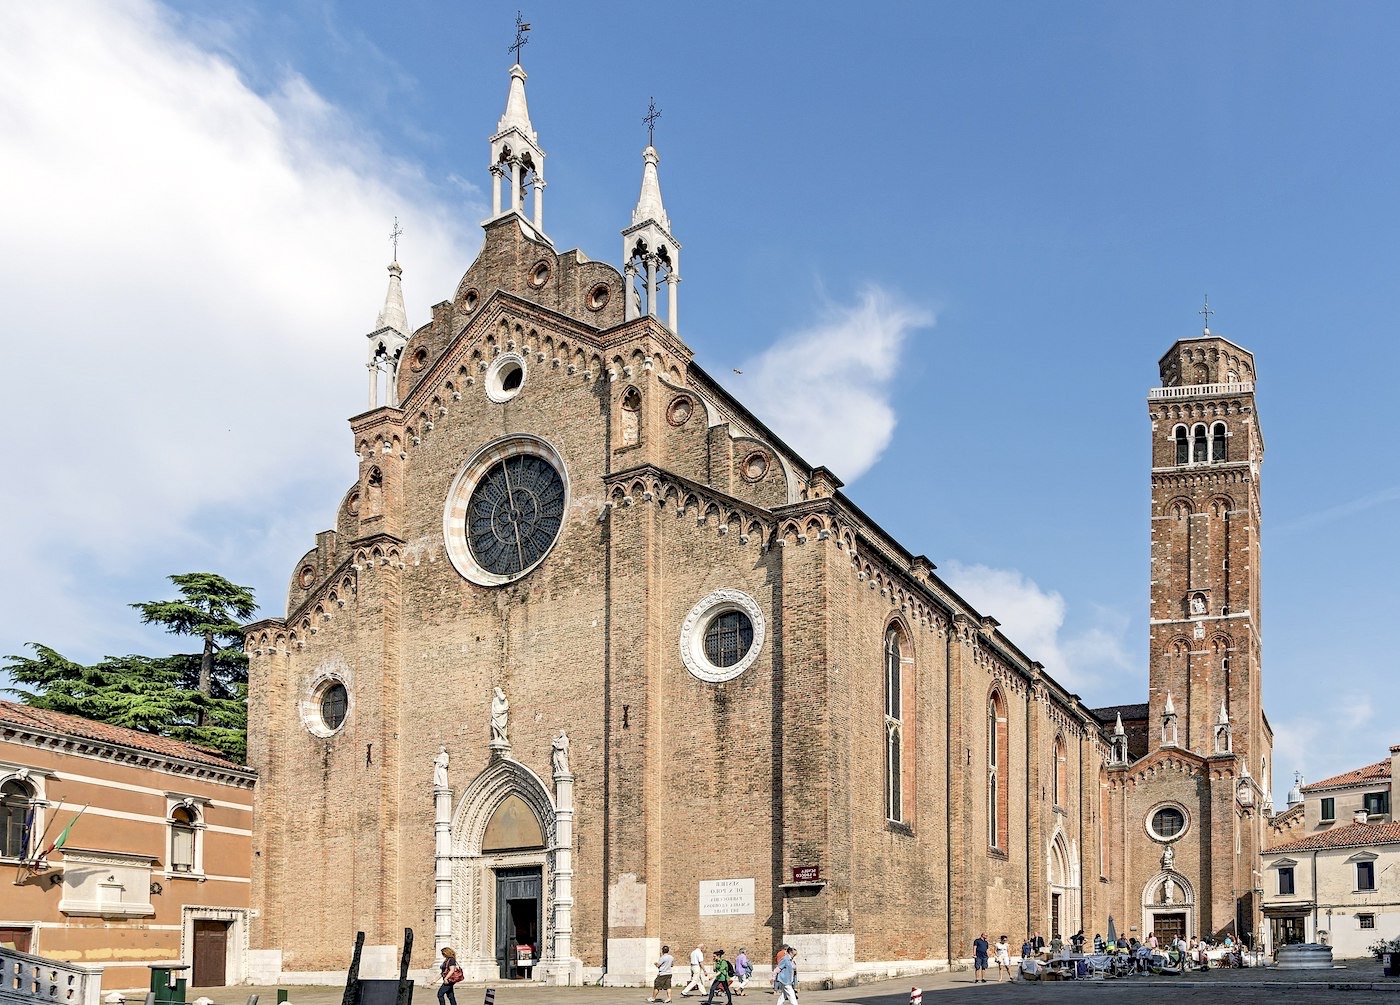 Basílica de Santa María dei Frari